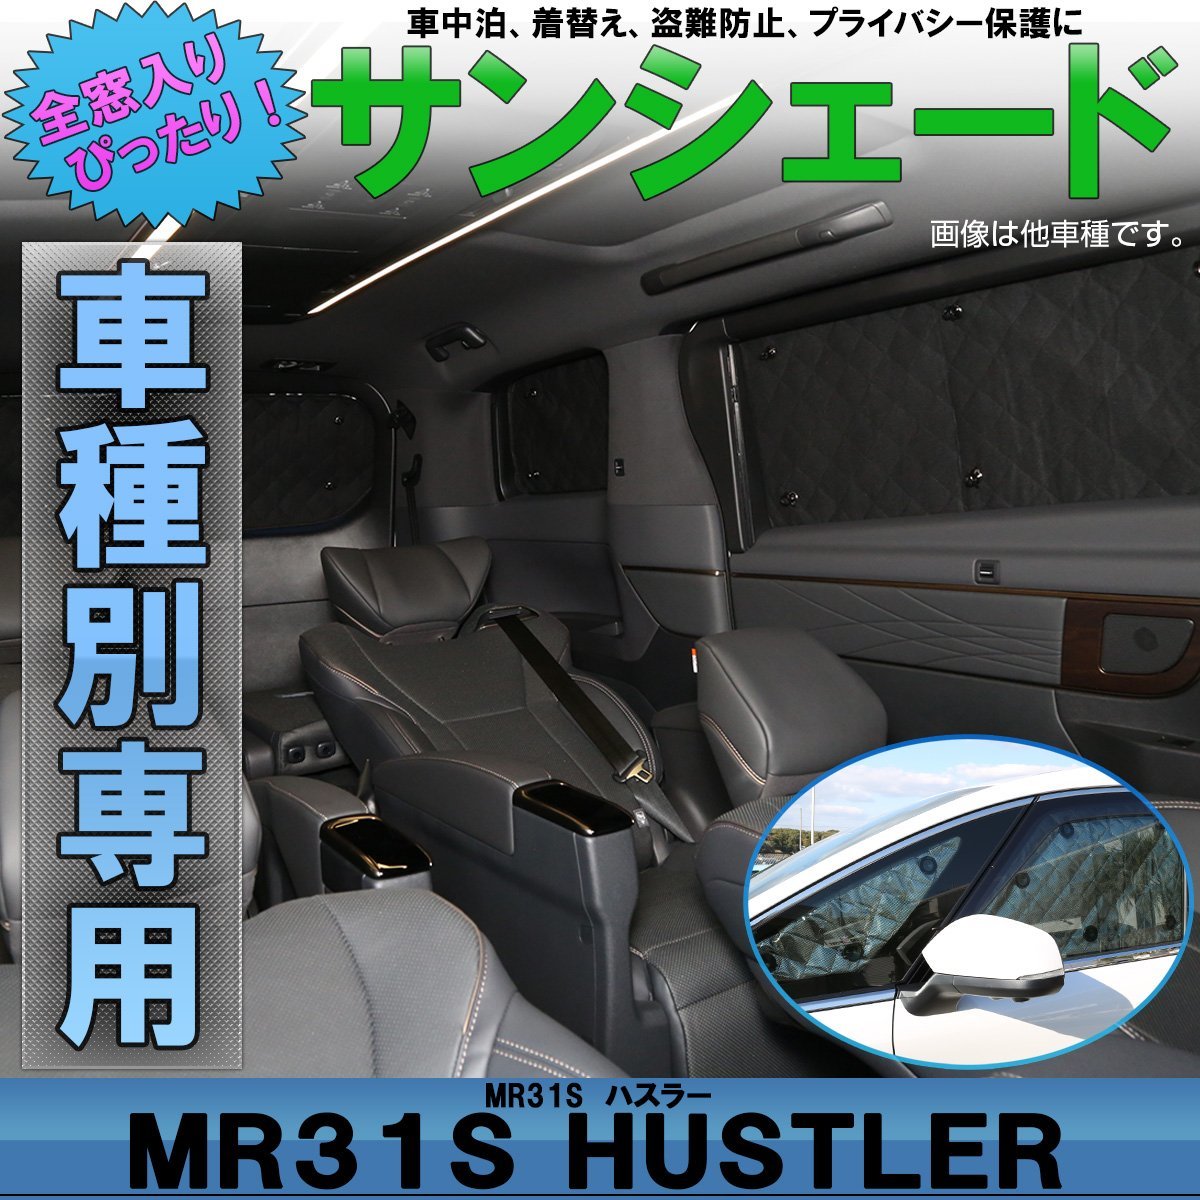 MR31S MR41S ハスラー 専用設計 サンシェード 全窓用セット 5層構造 ブラックメッシュ 車中泊 プライバシー保護に S-813